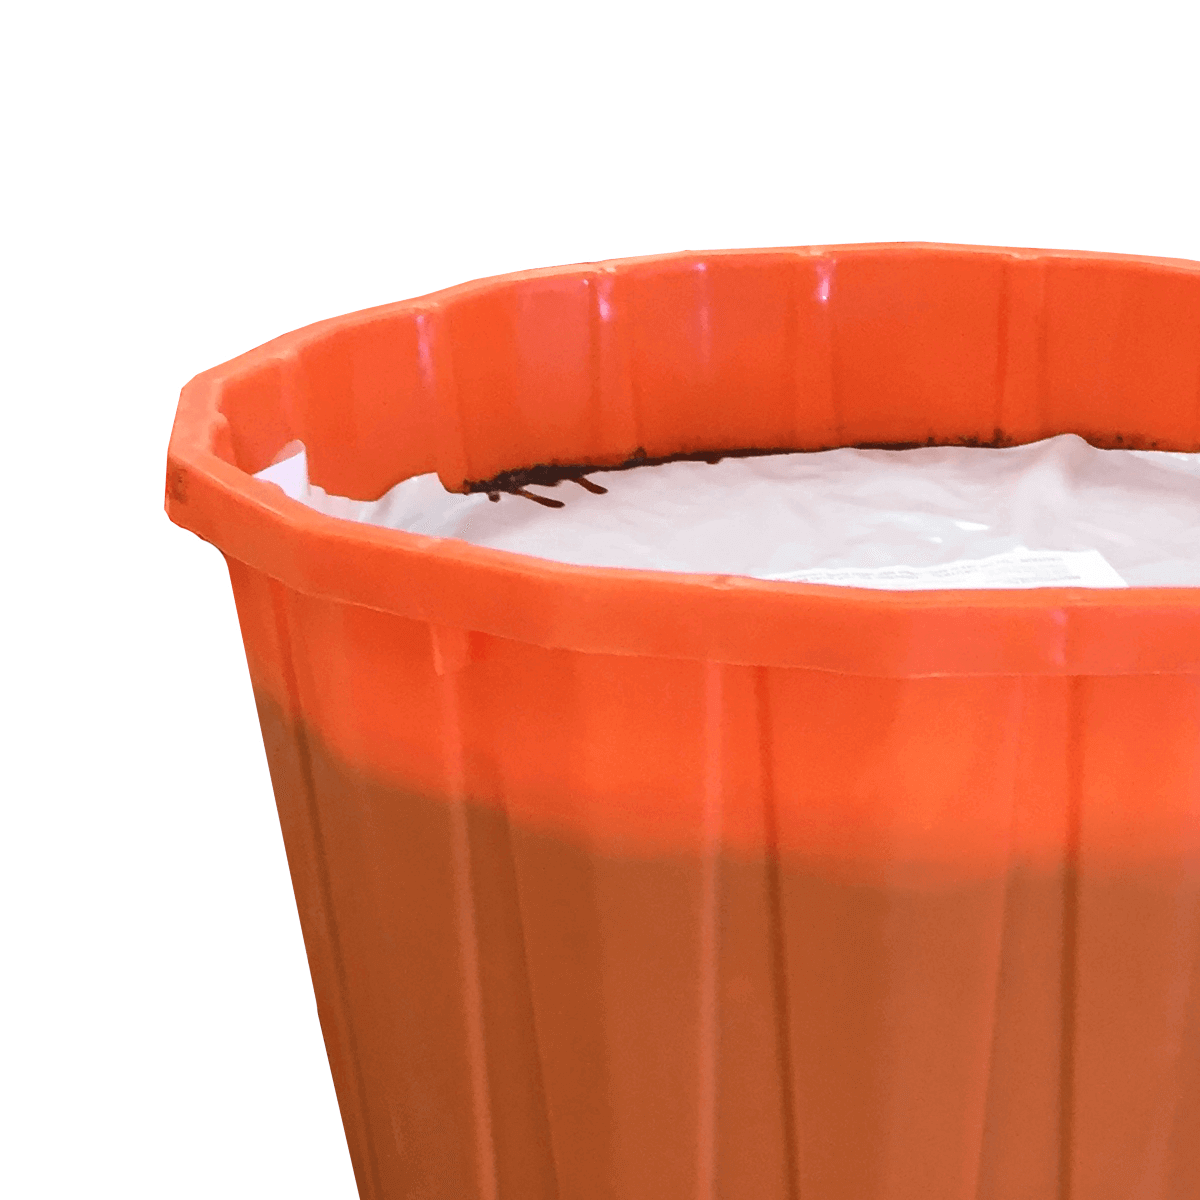 Prostock™ Low Moisture Tub - Orange - 16:0 - 113 kg